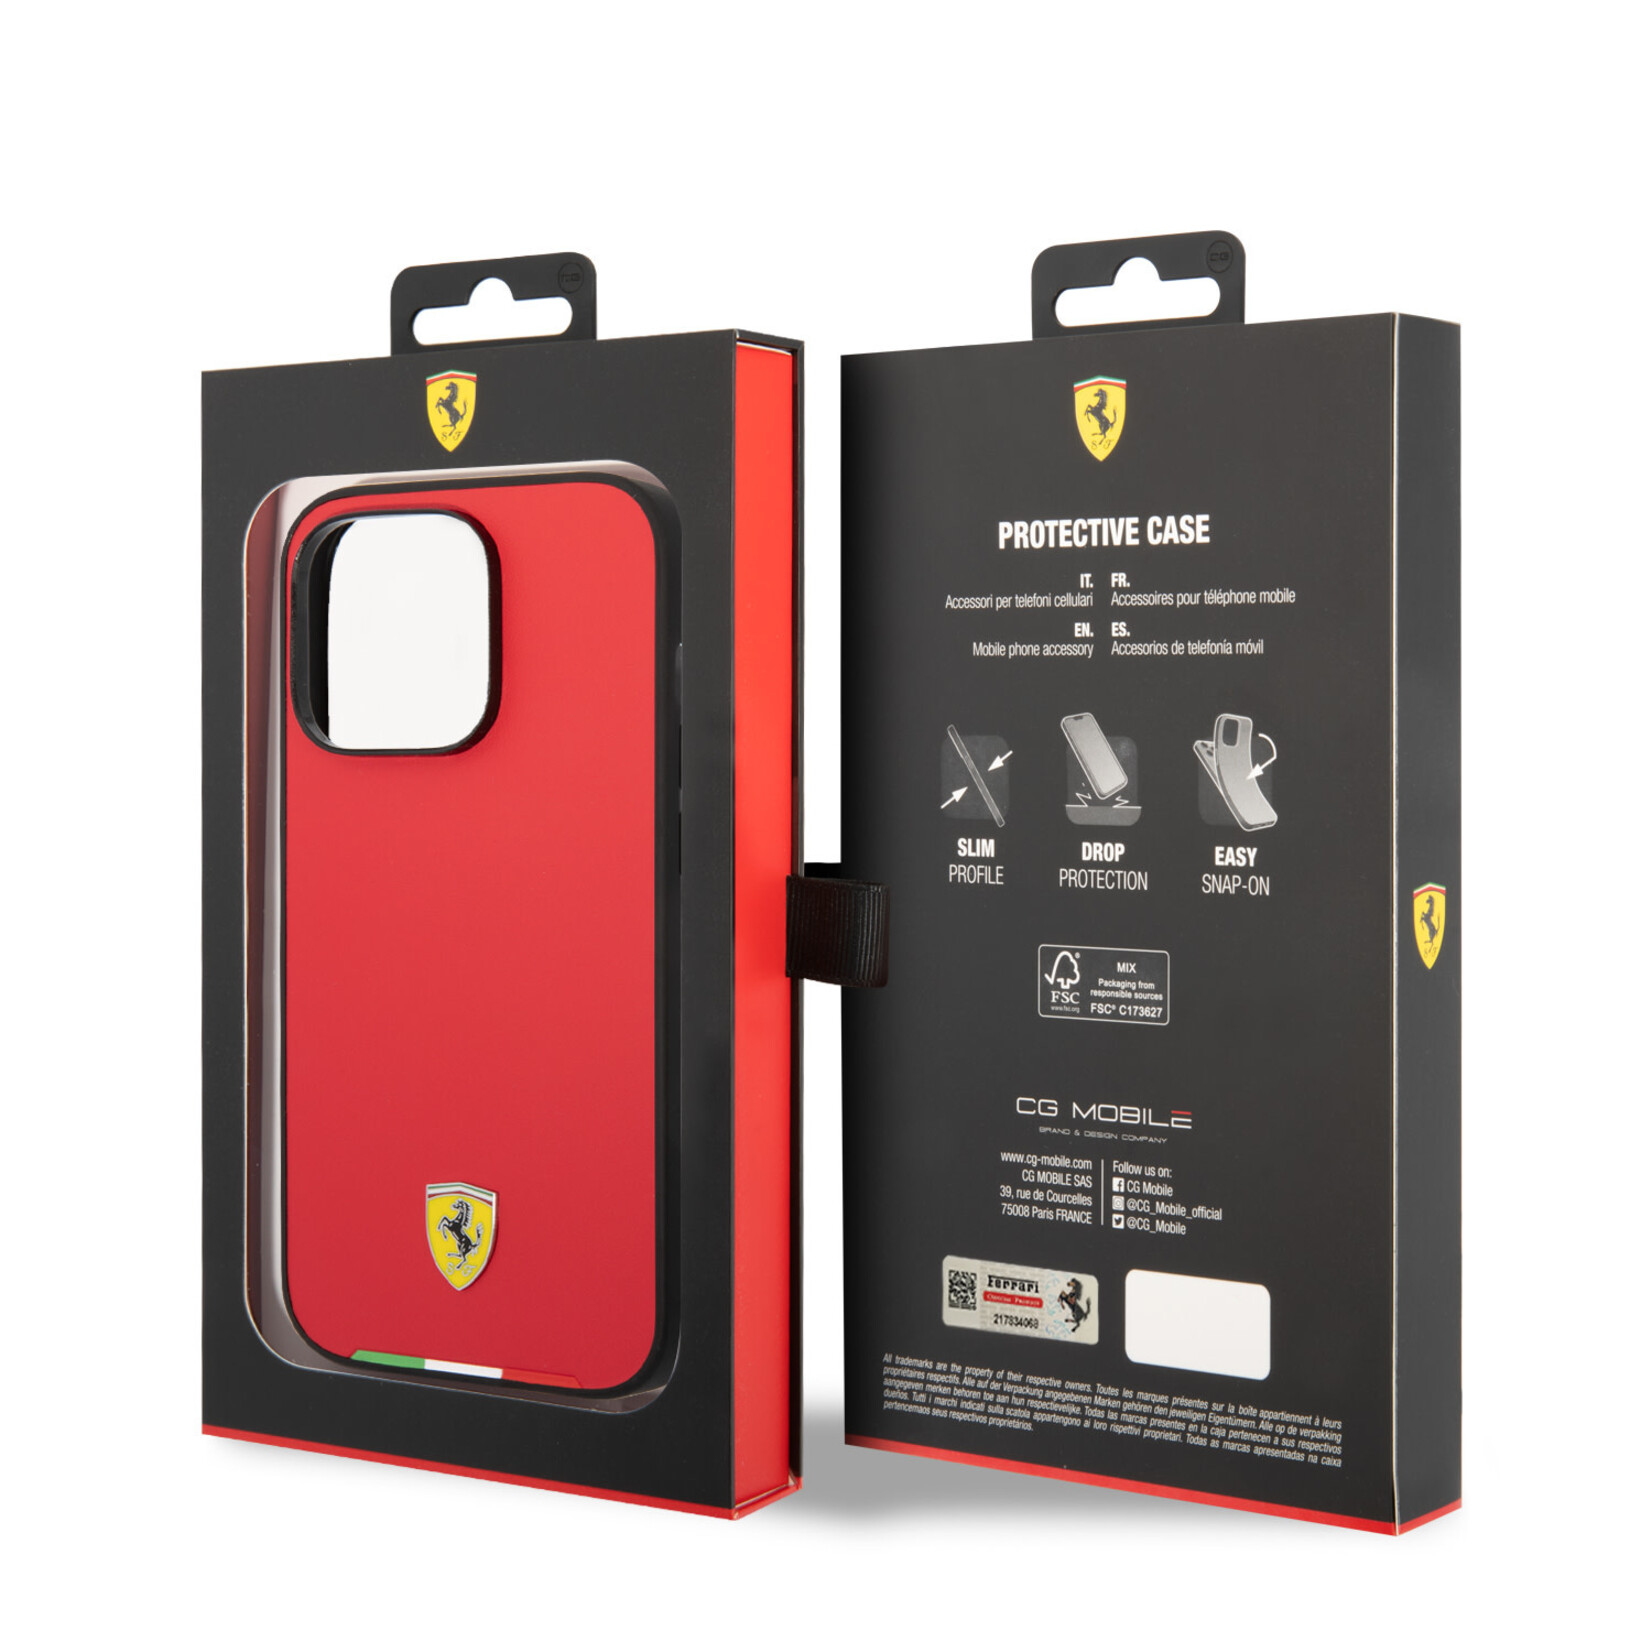 Ferrari Ferrari iPhone 14 Pro Hoesje - Rood PU Cover - Bescherming & Back Cover - Telefoonhoesje voor Apple iPhone 14 Pro